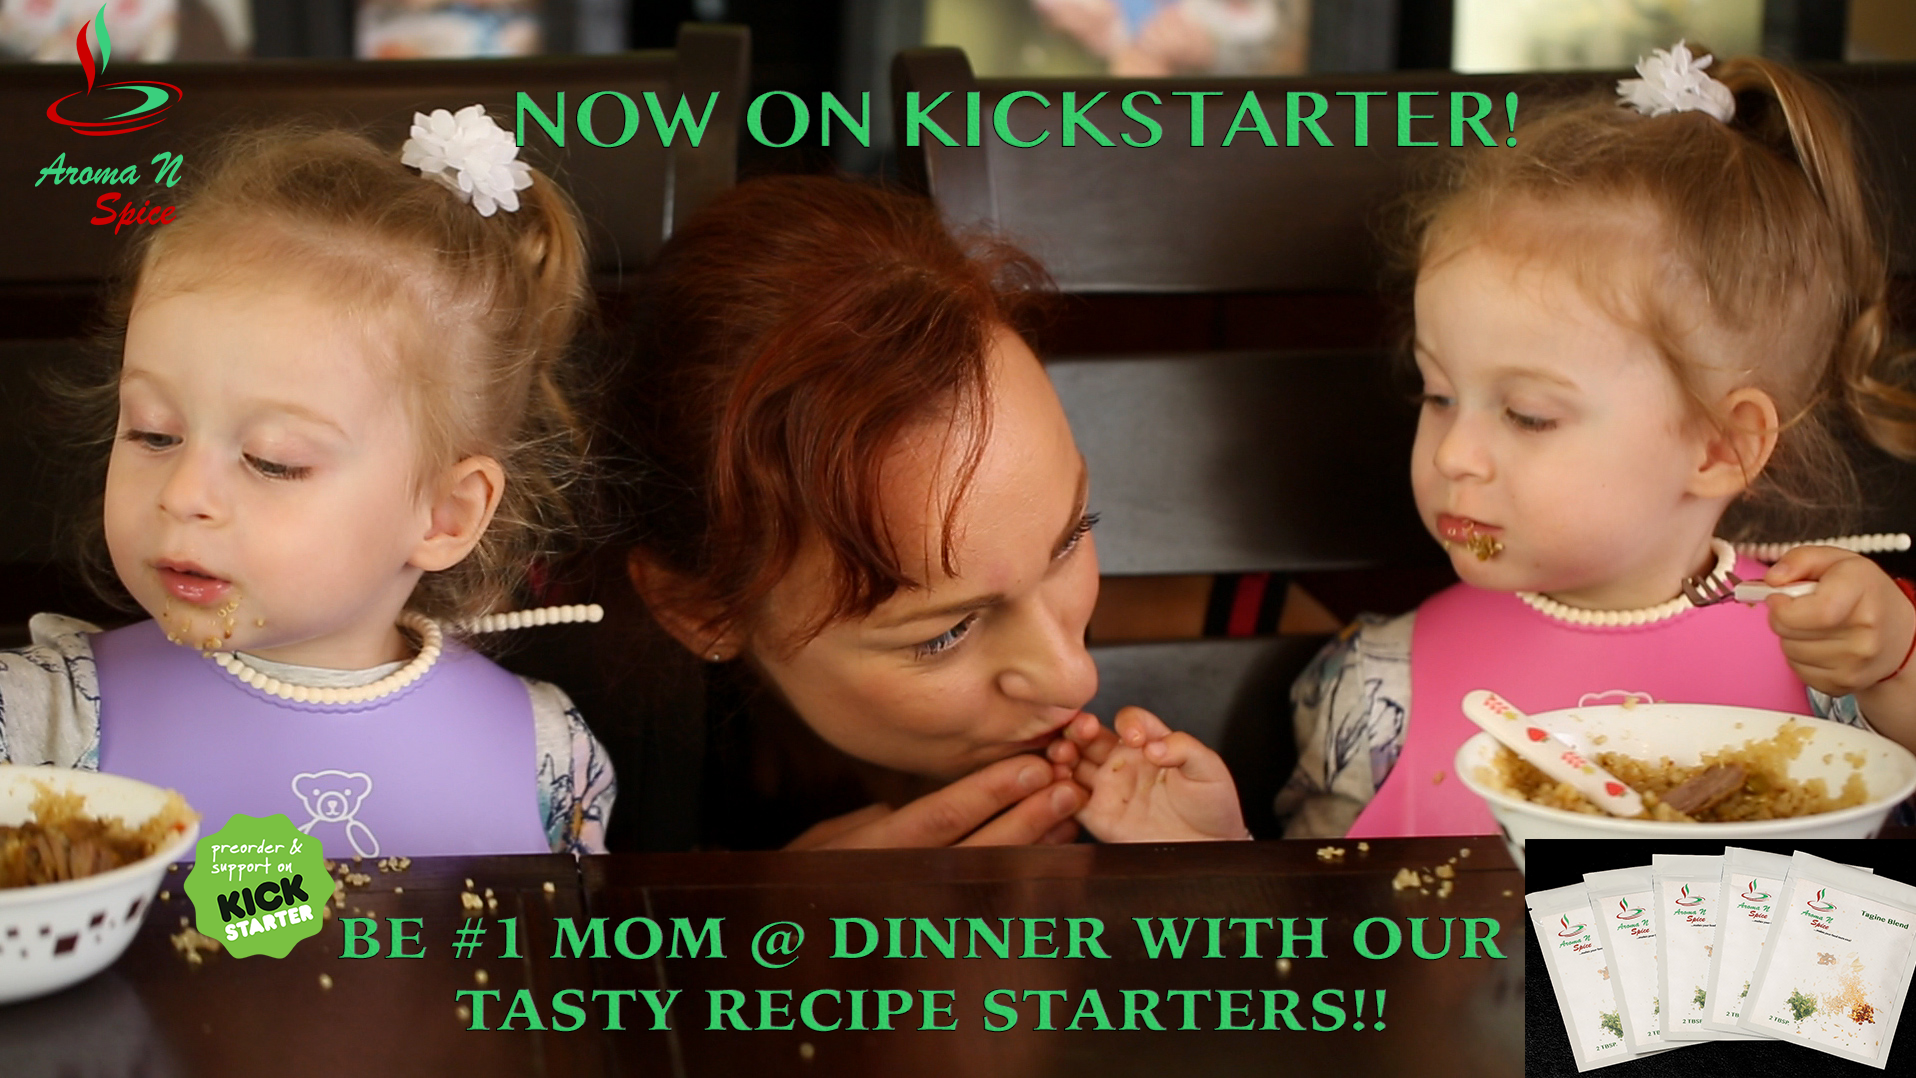 Tastiest Spice Mixes Exclusively on Kickstarter Now!